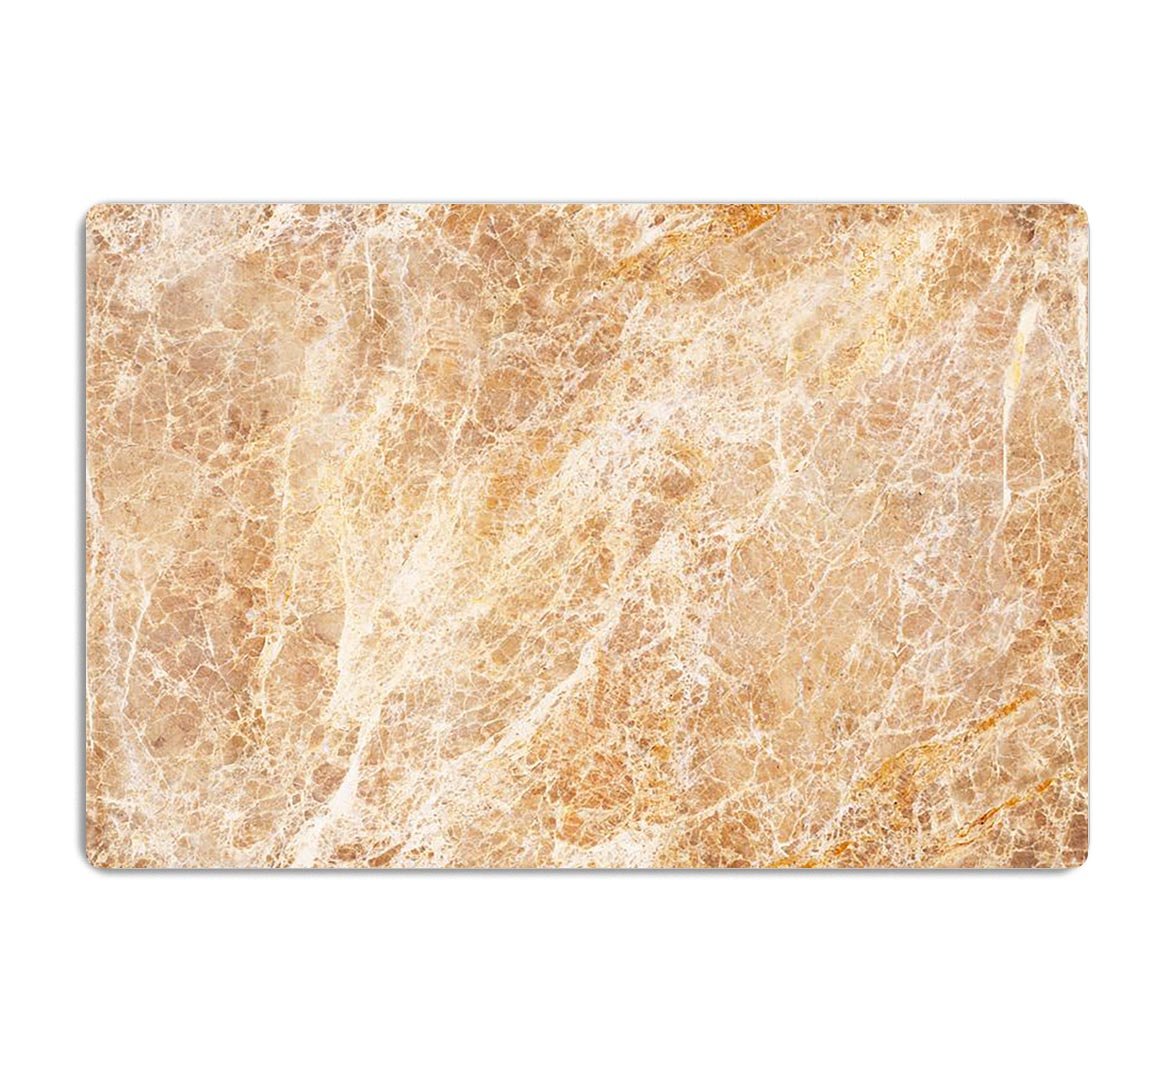 Warm colored natural marble HD Metal Print - Canvas Art Rocks - 1